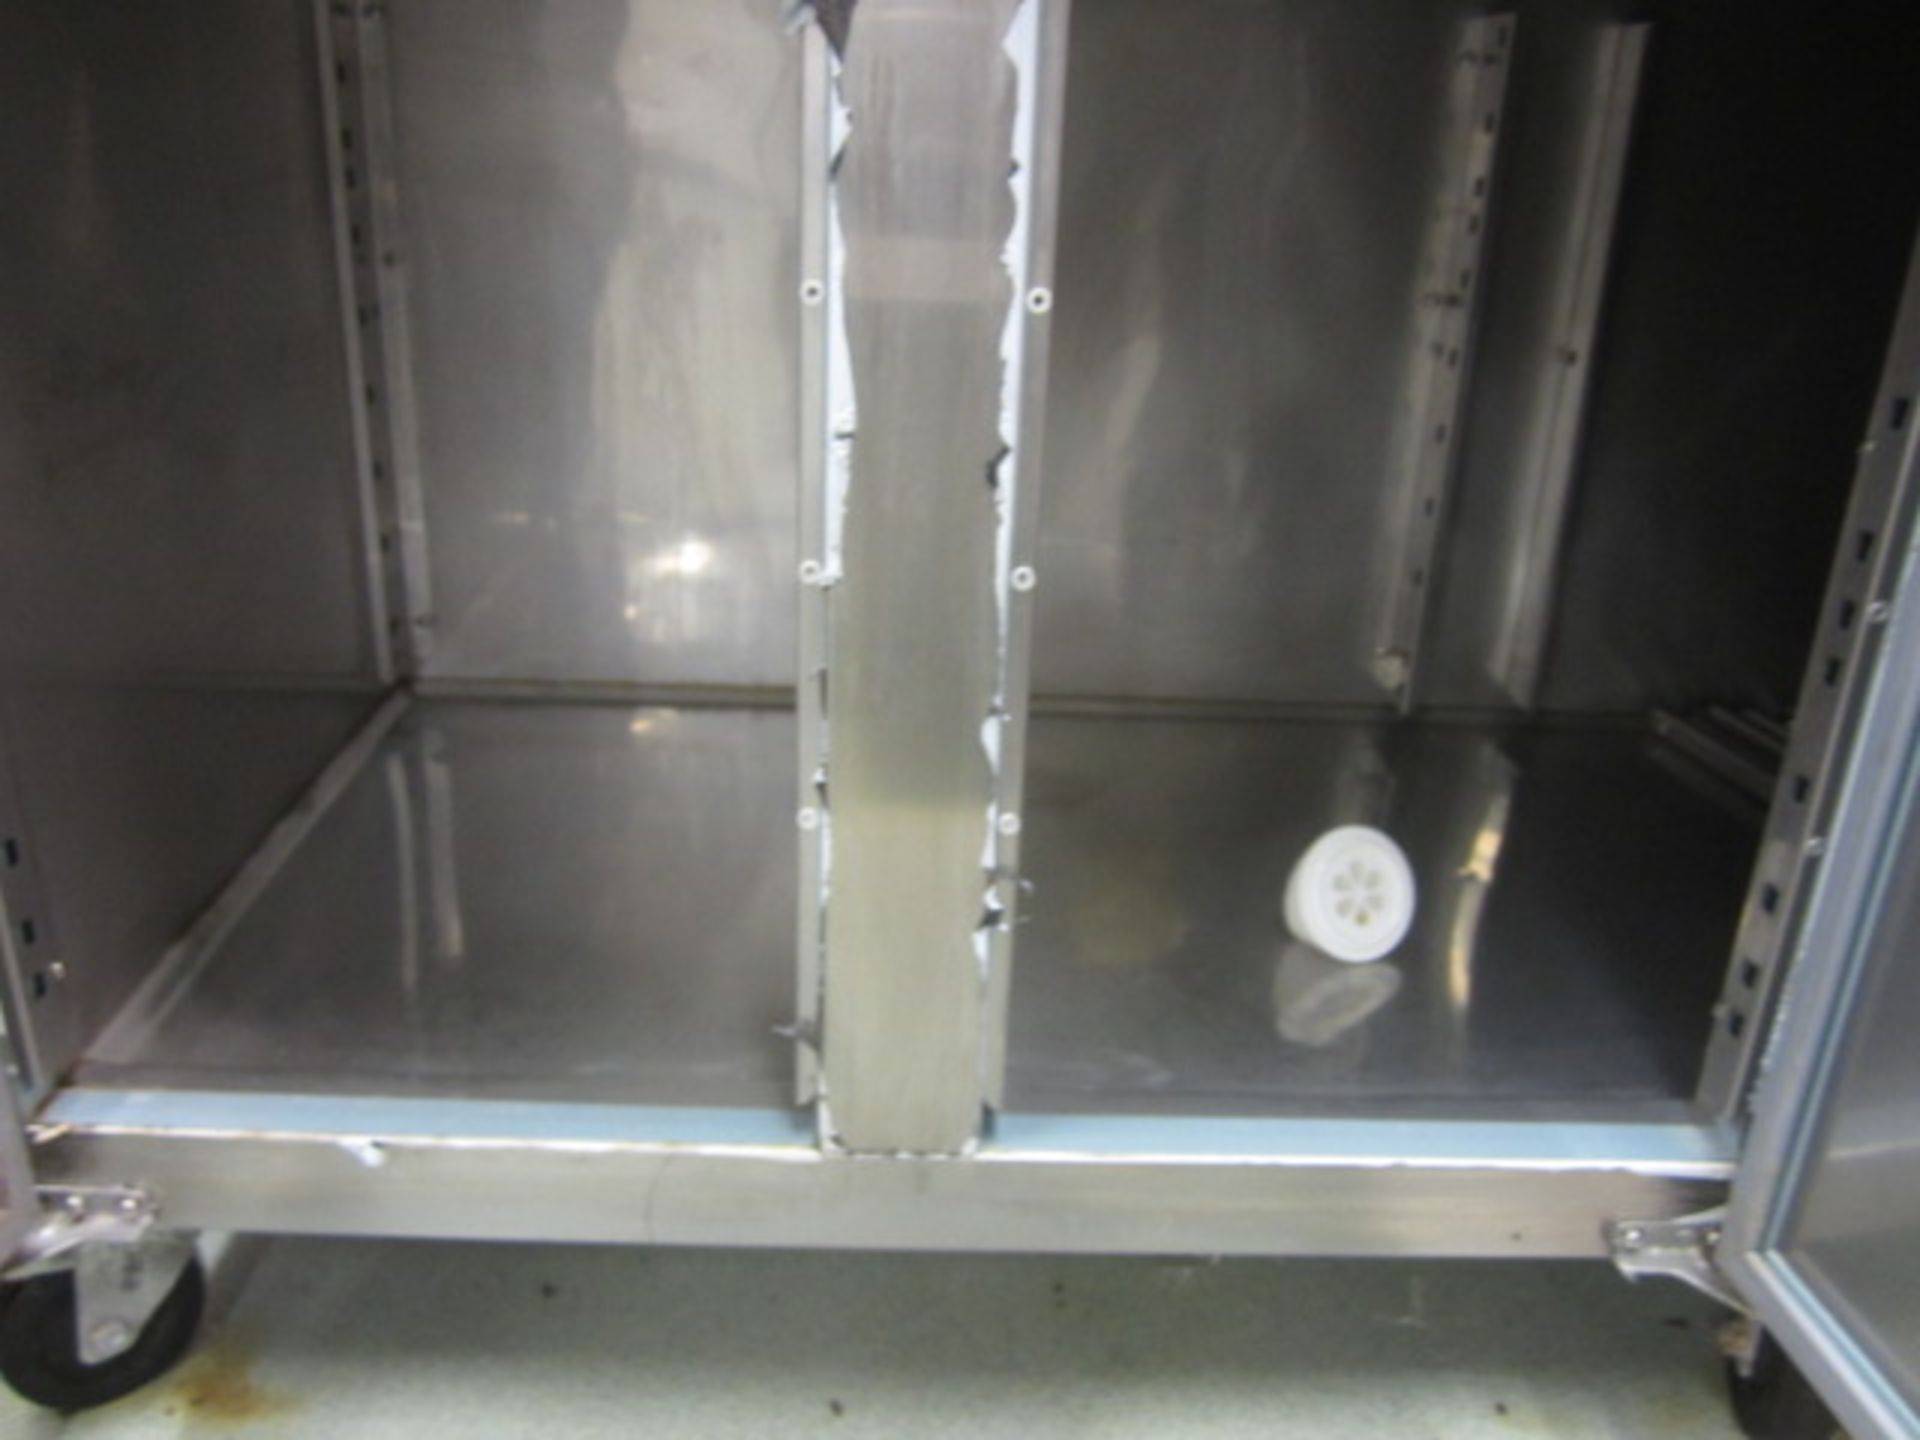 Unbadged stainless steel 4 door refrigerator with preparation worktop, 2230mm x 700mm x H850mm - Image 4 of 5